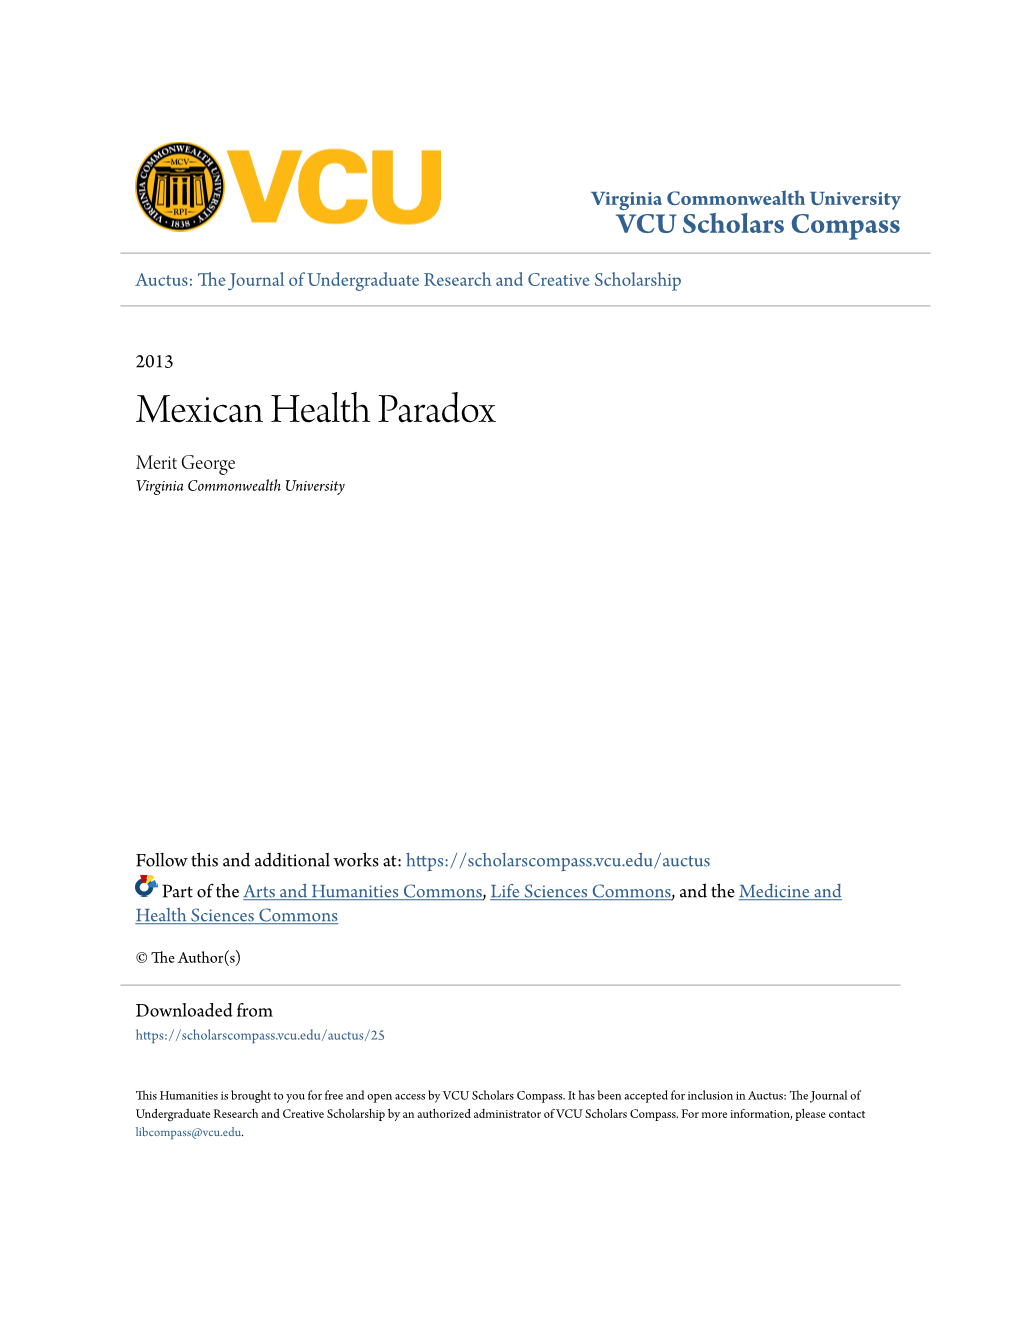 Mexican Health Paradox Merit George Virginia Commonwealth University